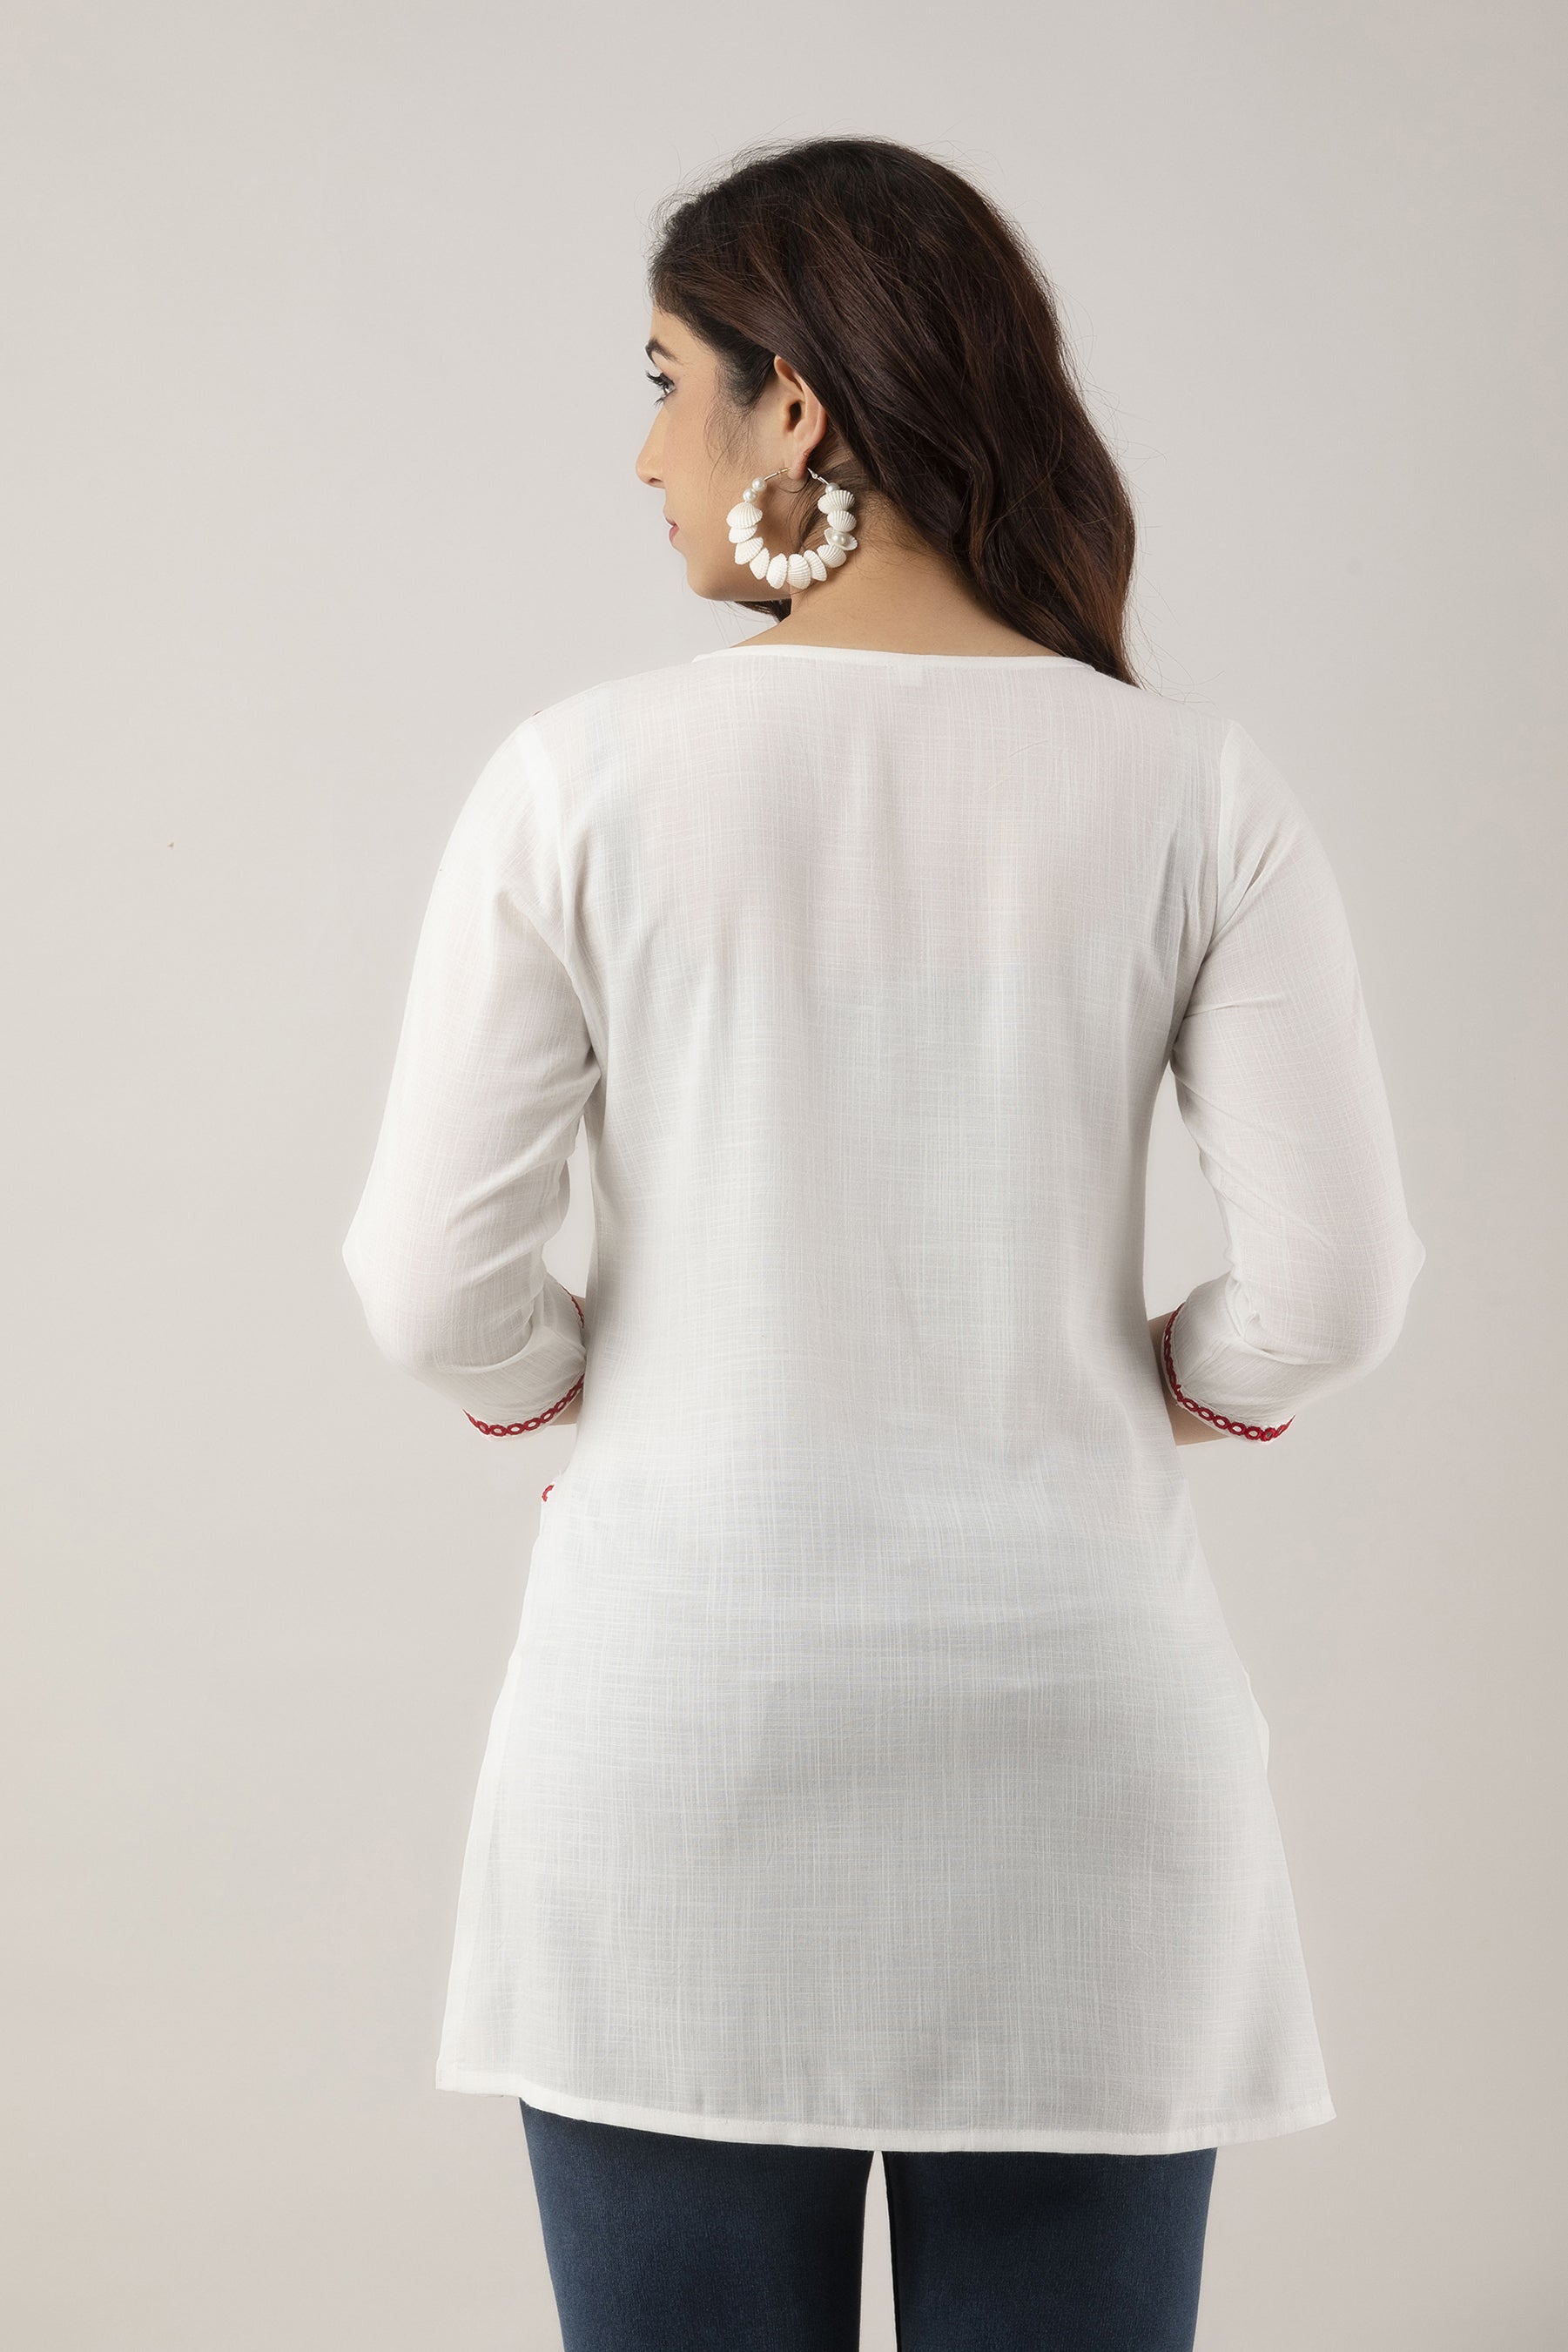 Women's Embroidered Viscose Rayon Regular Top (White) - Charu